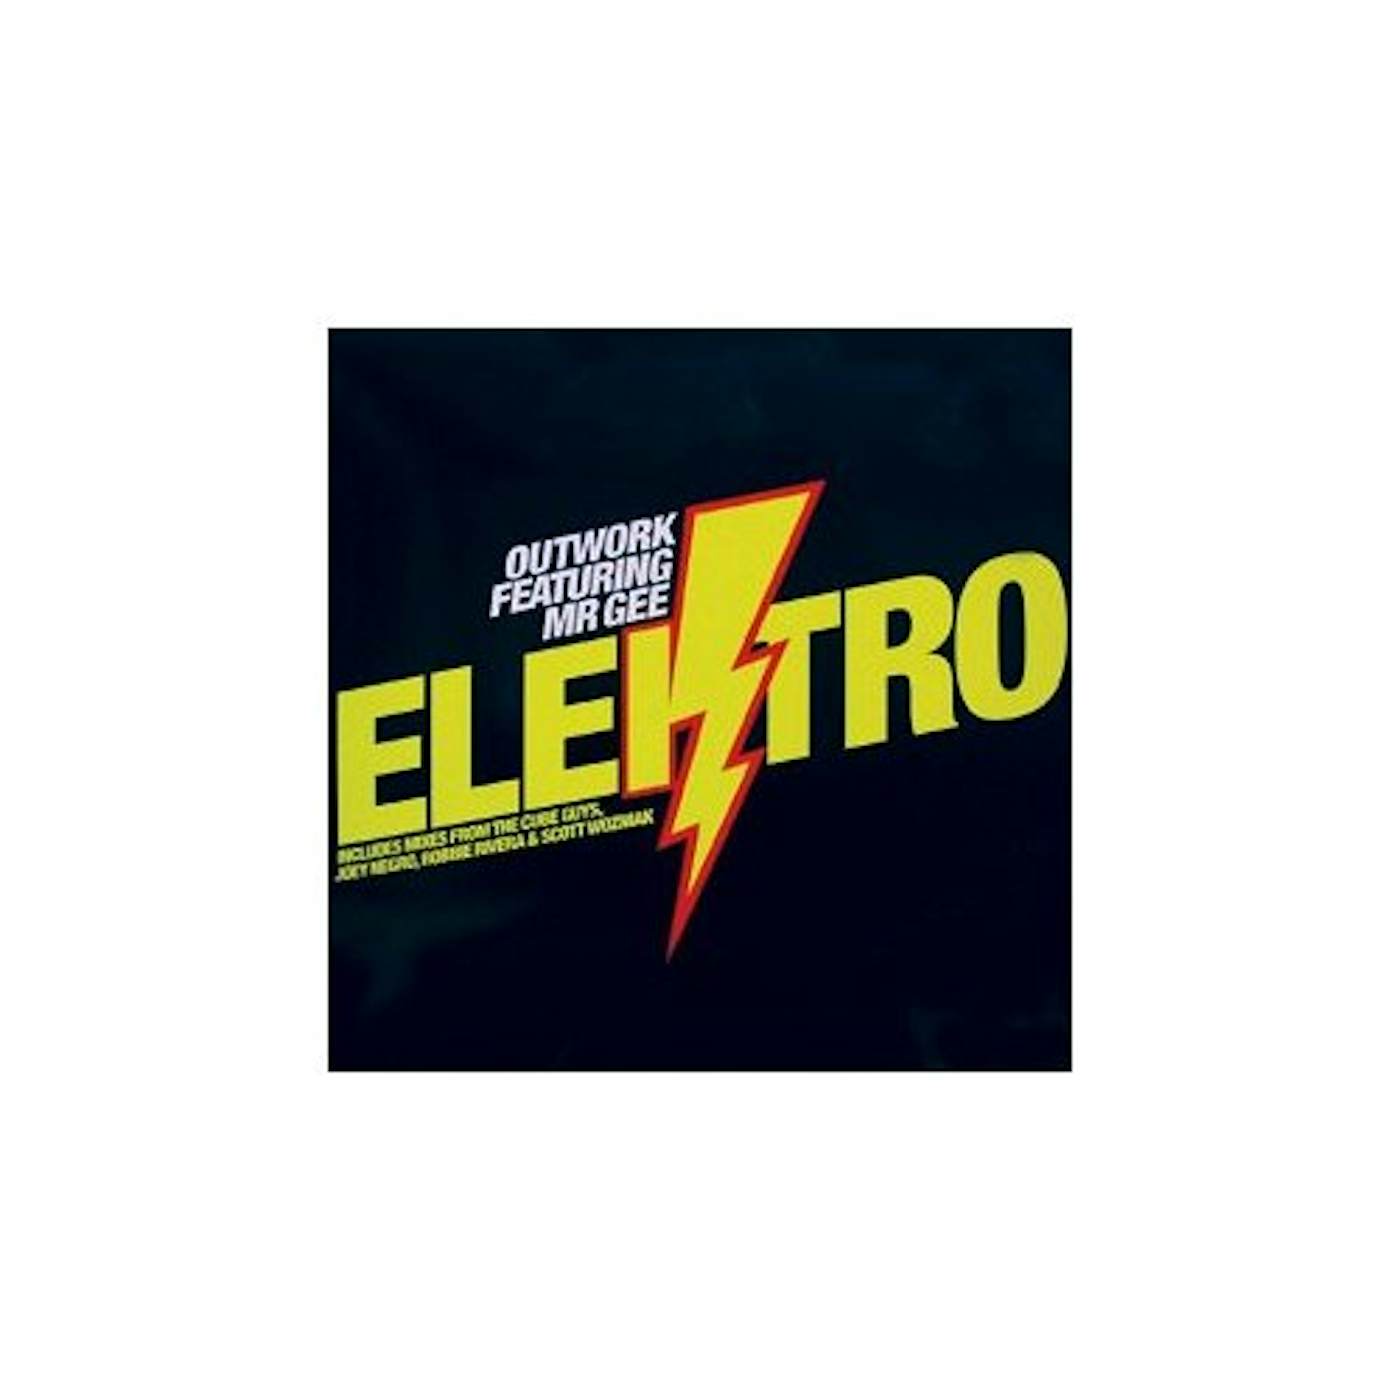 Outwork ELEKTRO Vinyl Record - UK Release